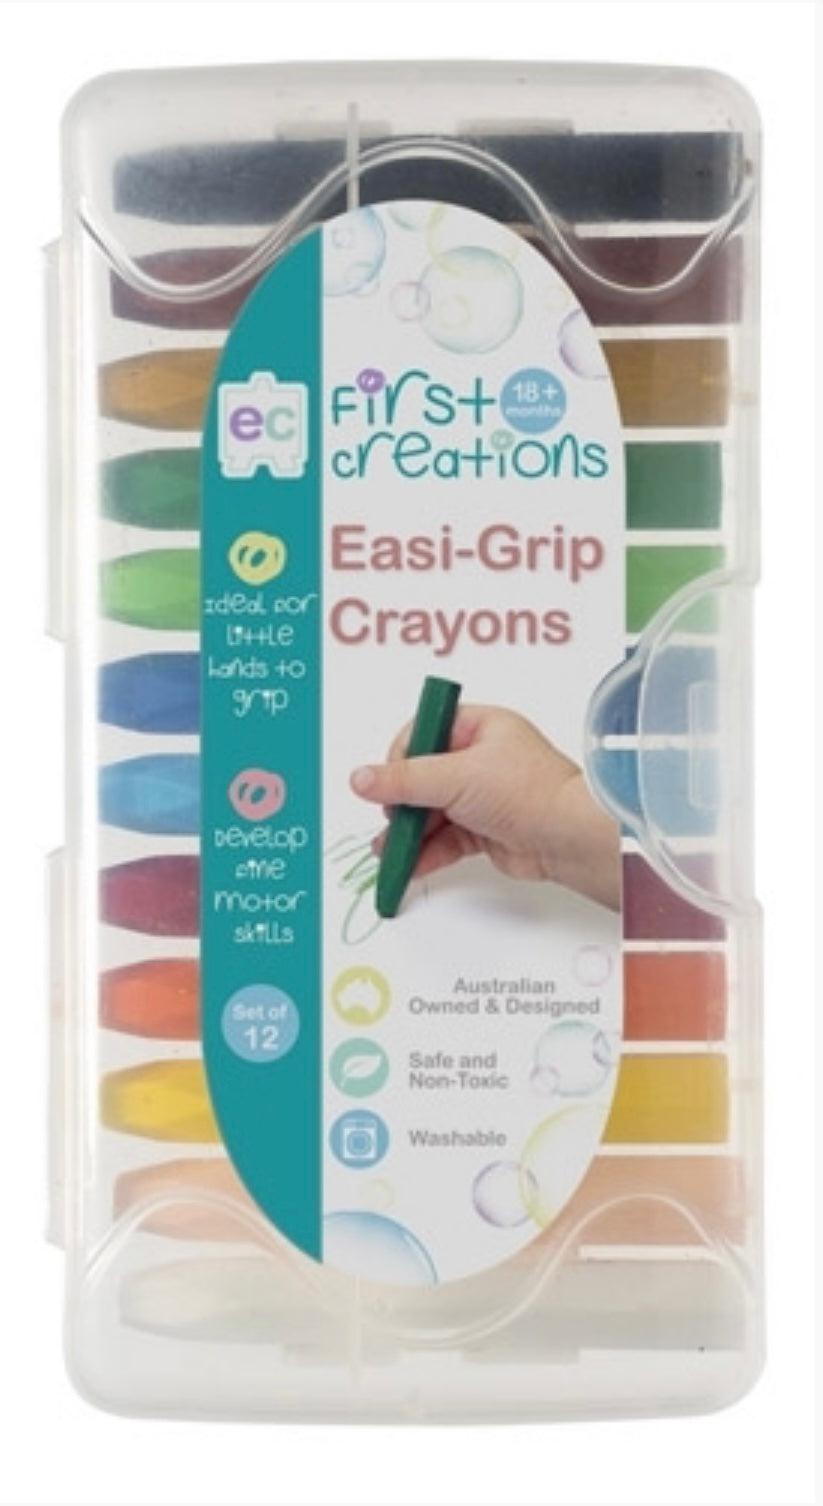 Easi grip Crayons